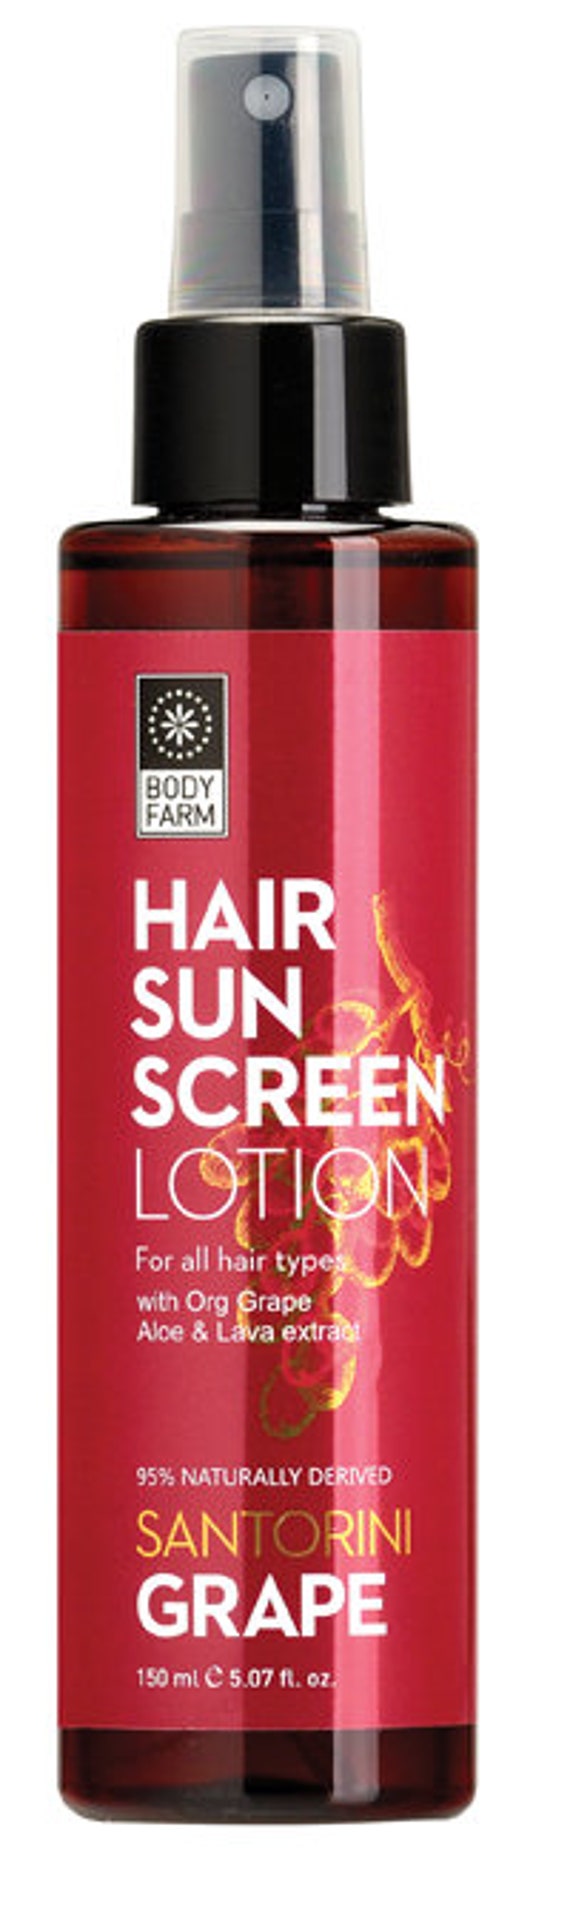 Hair Sun Screen Lotion Santorini Grape 150ml E 5.07 Fl Oz, Sun Protection,  Gift, Greek Islands -  Canada